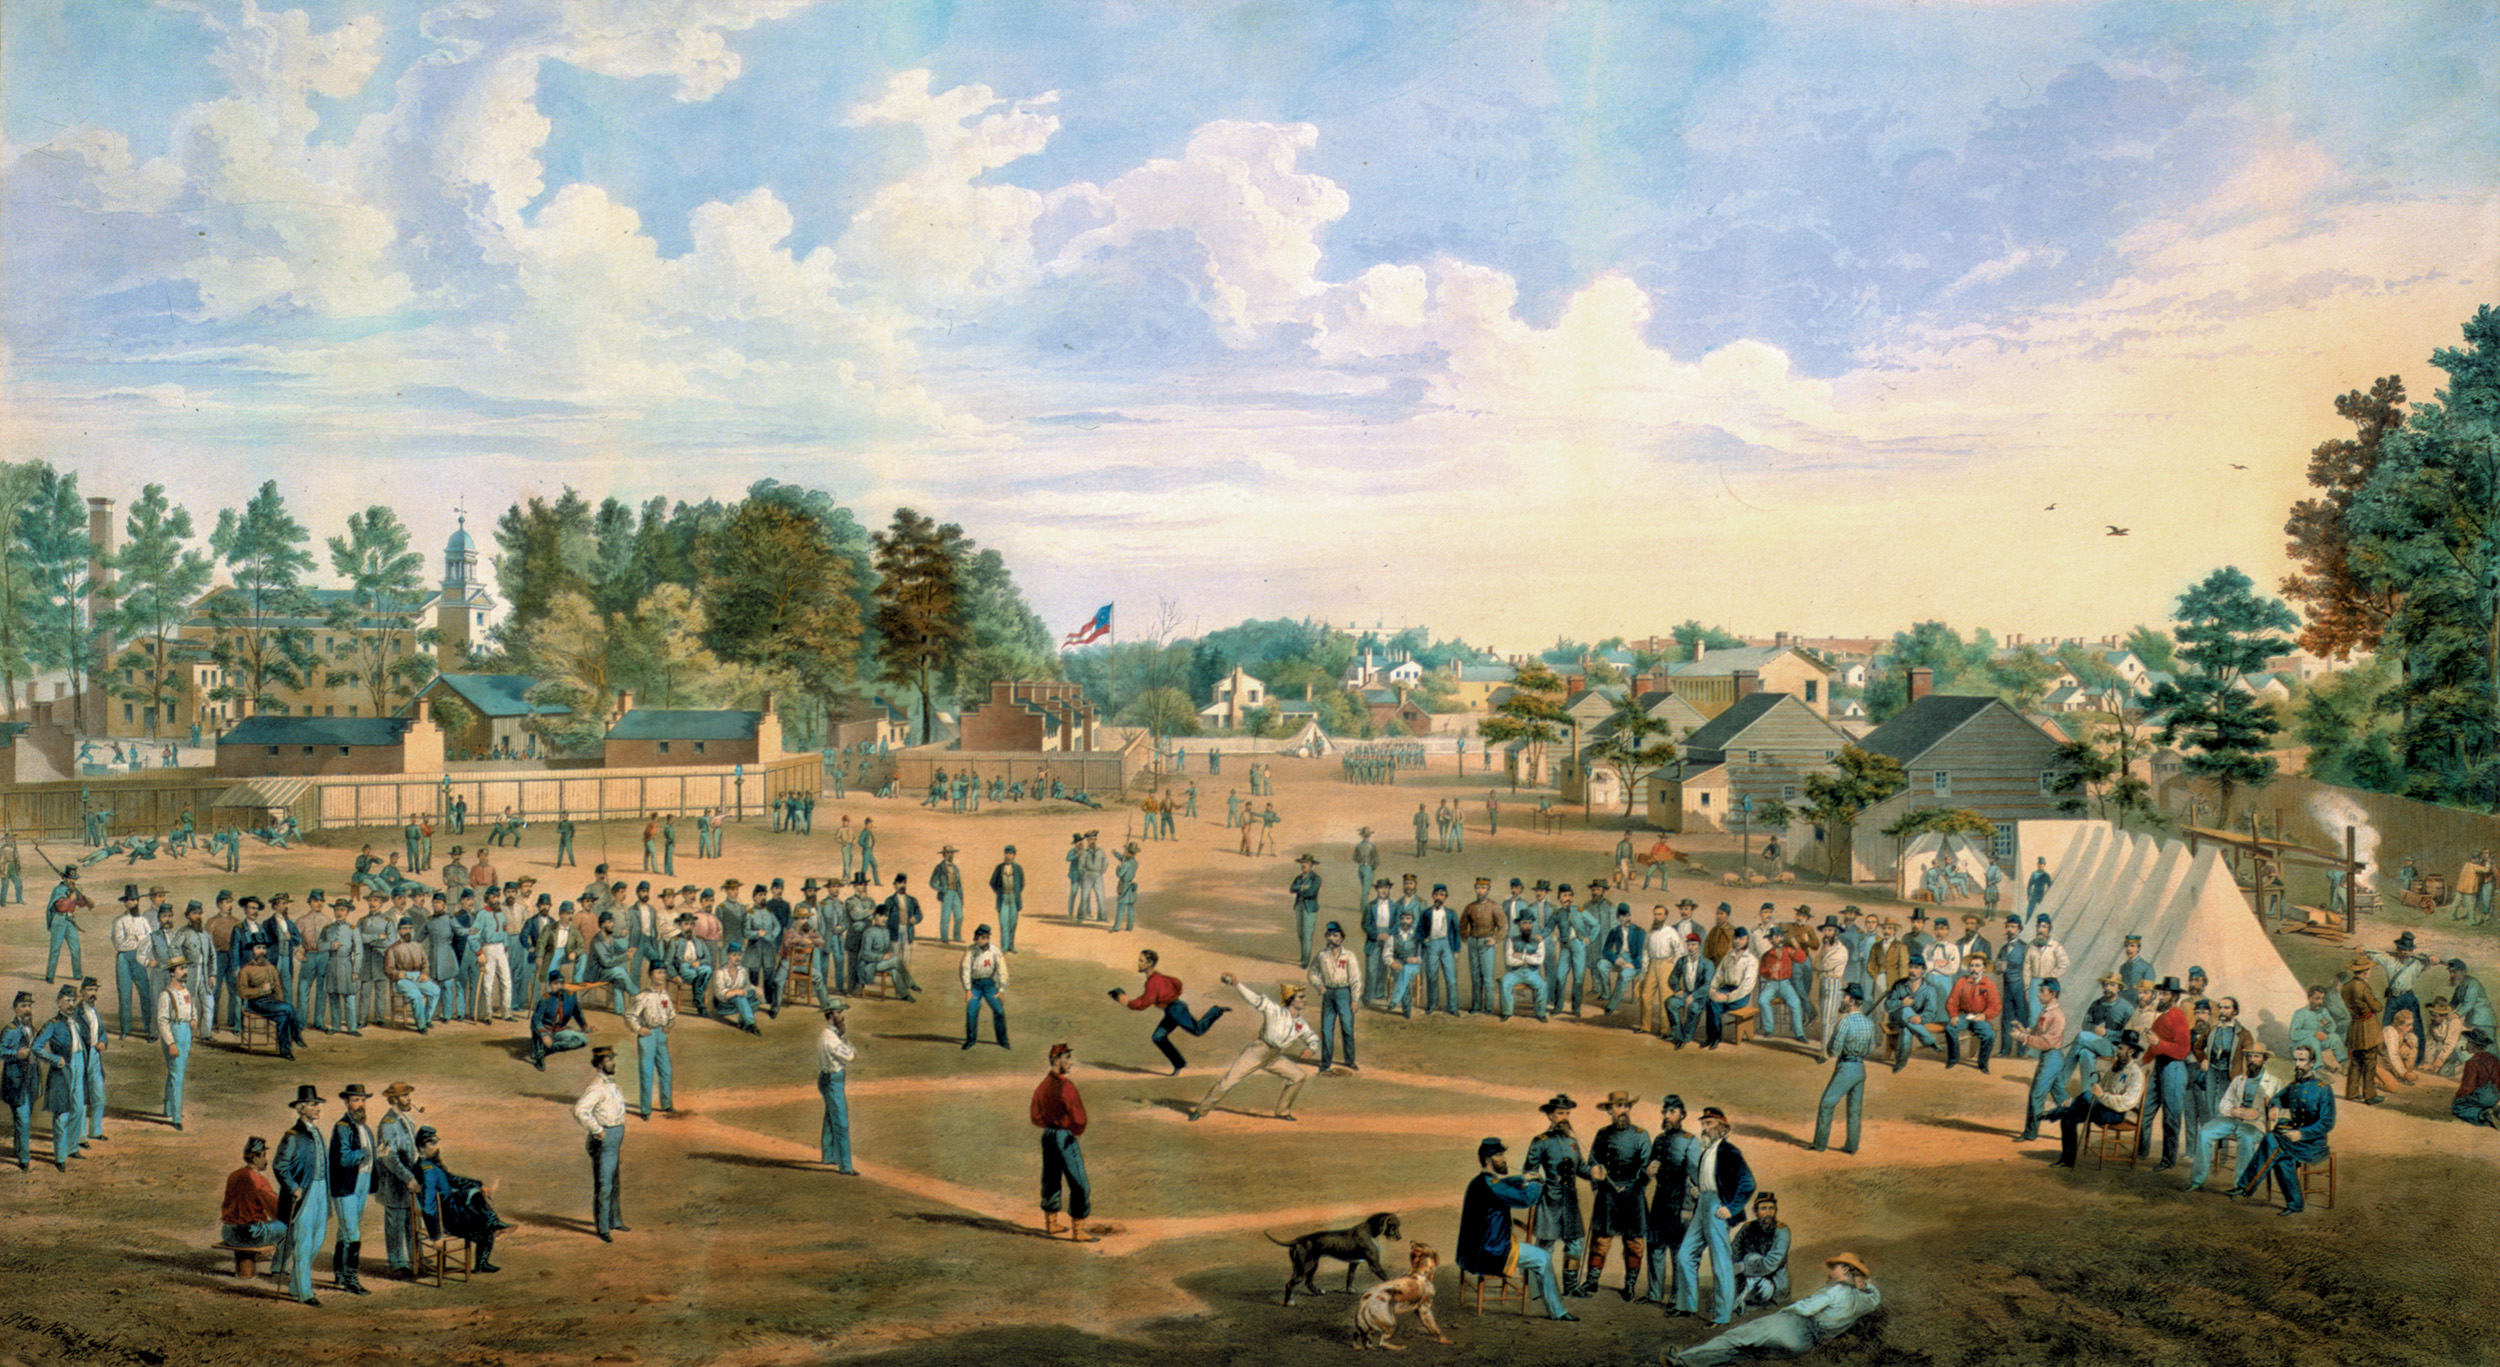 Union prisoners play baseball at Salisbury Camp, NC, during the U.S. Civil War. 